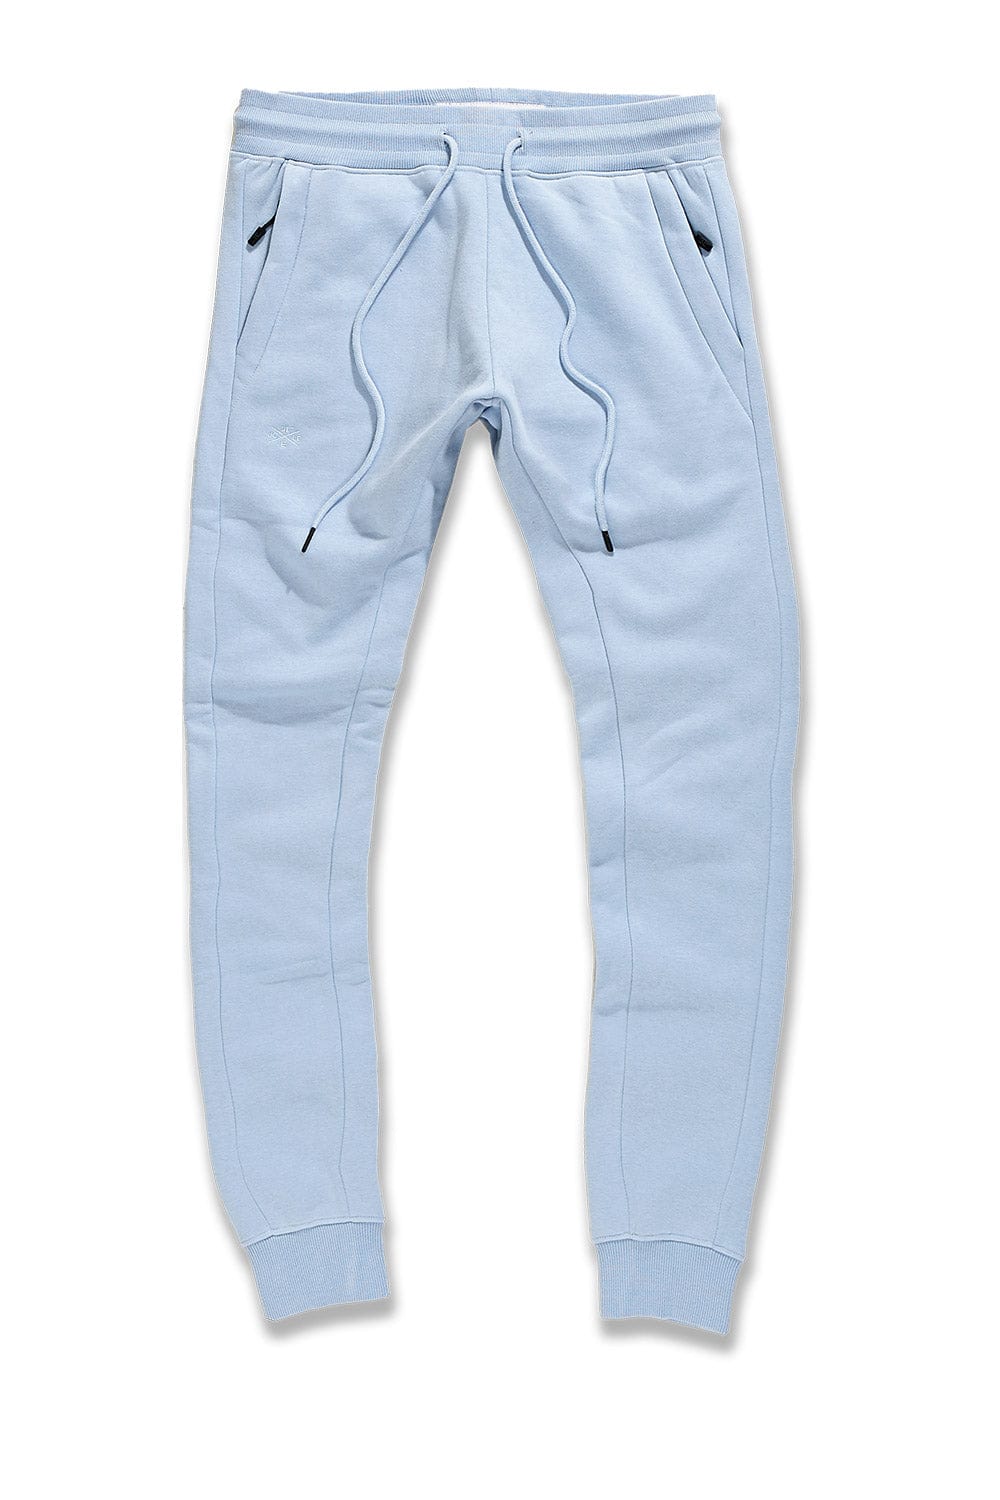 Jordan Craig Uptown Jogger Sweatpants (Secret Sale) Carolina Blue / S